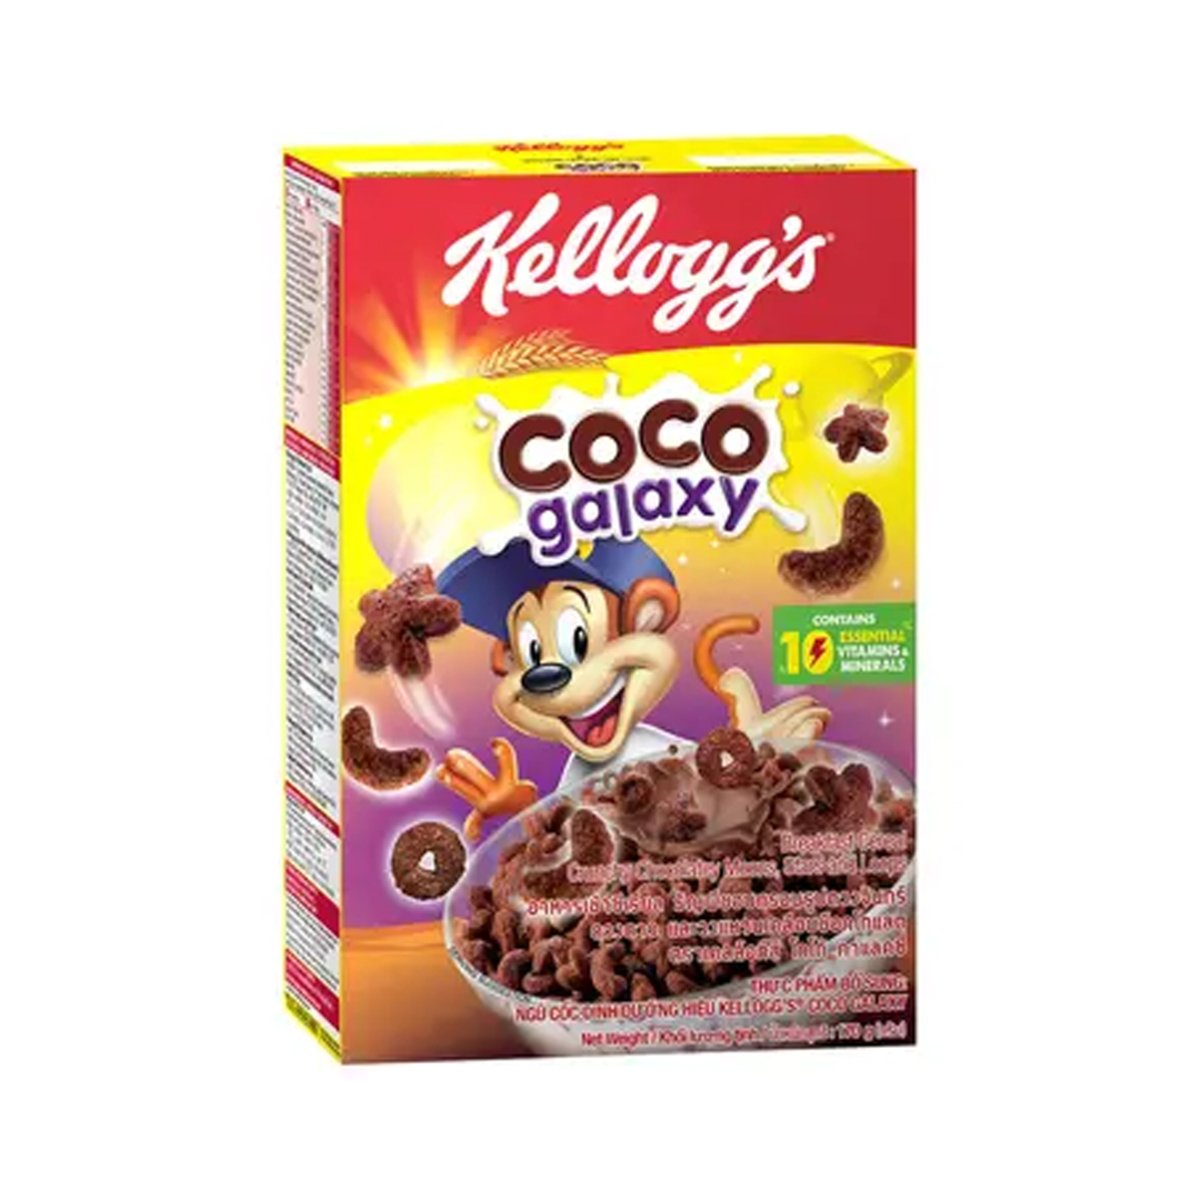 Kellogg's Coco Galaxy 300g